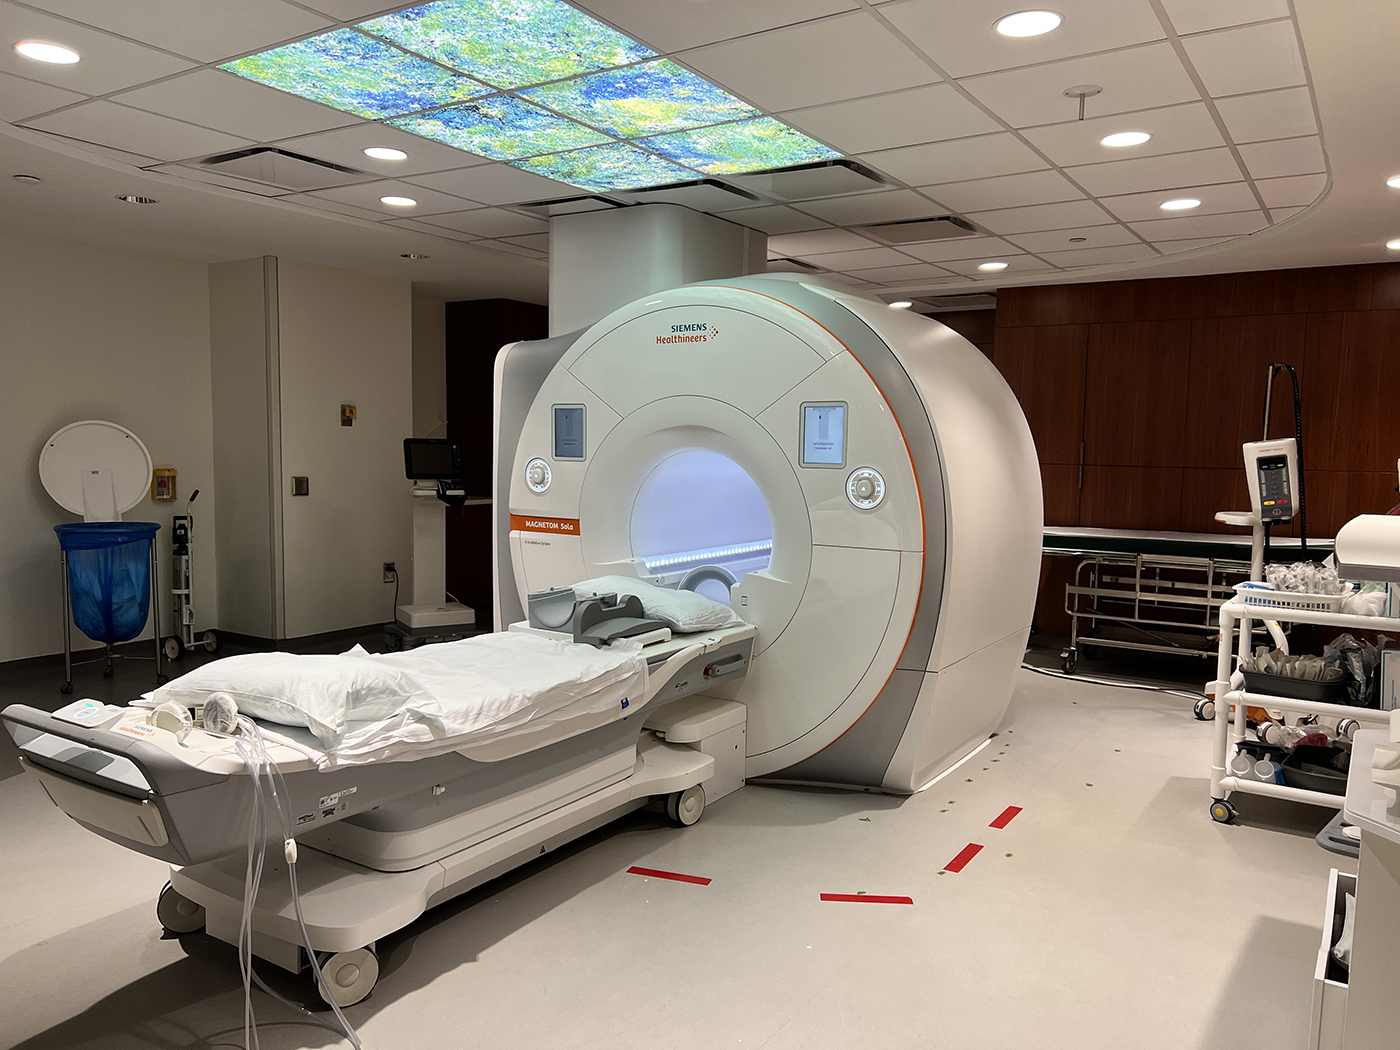 Cardiac MRI machine in a hospital treatment room.